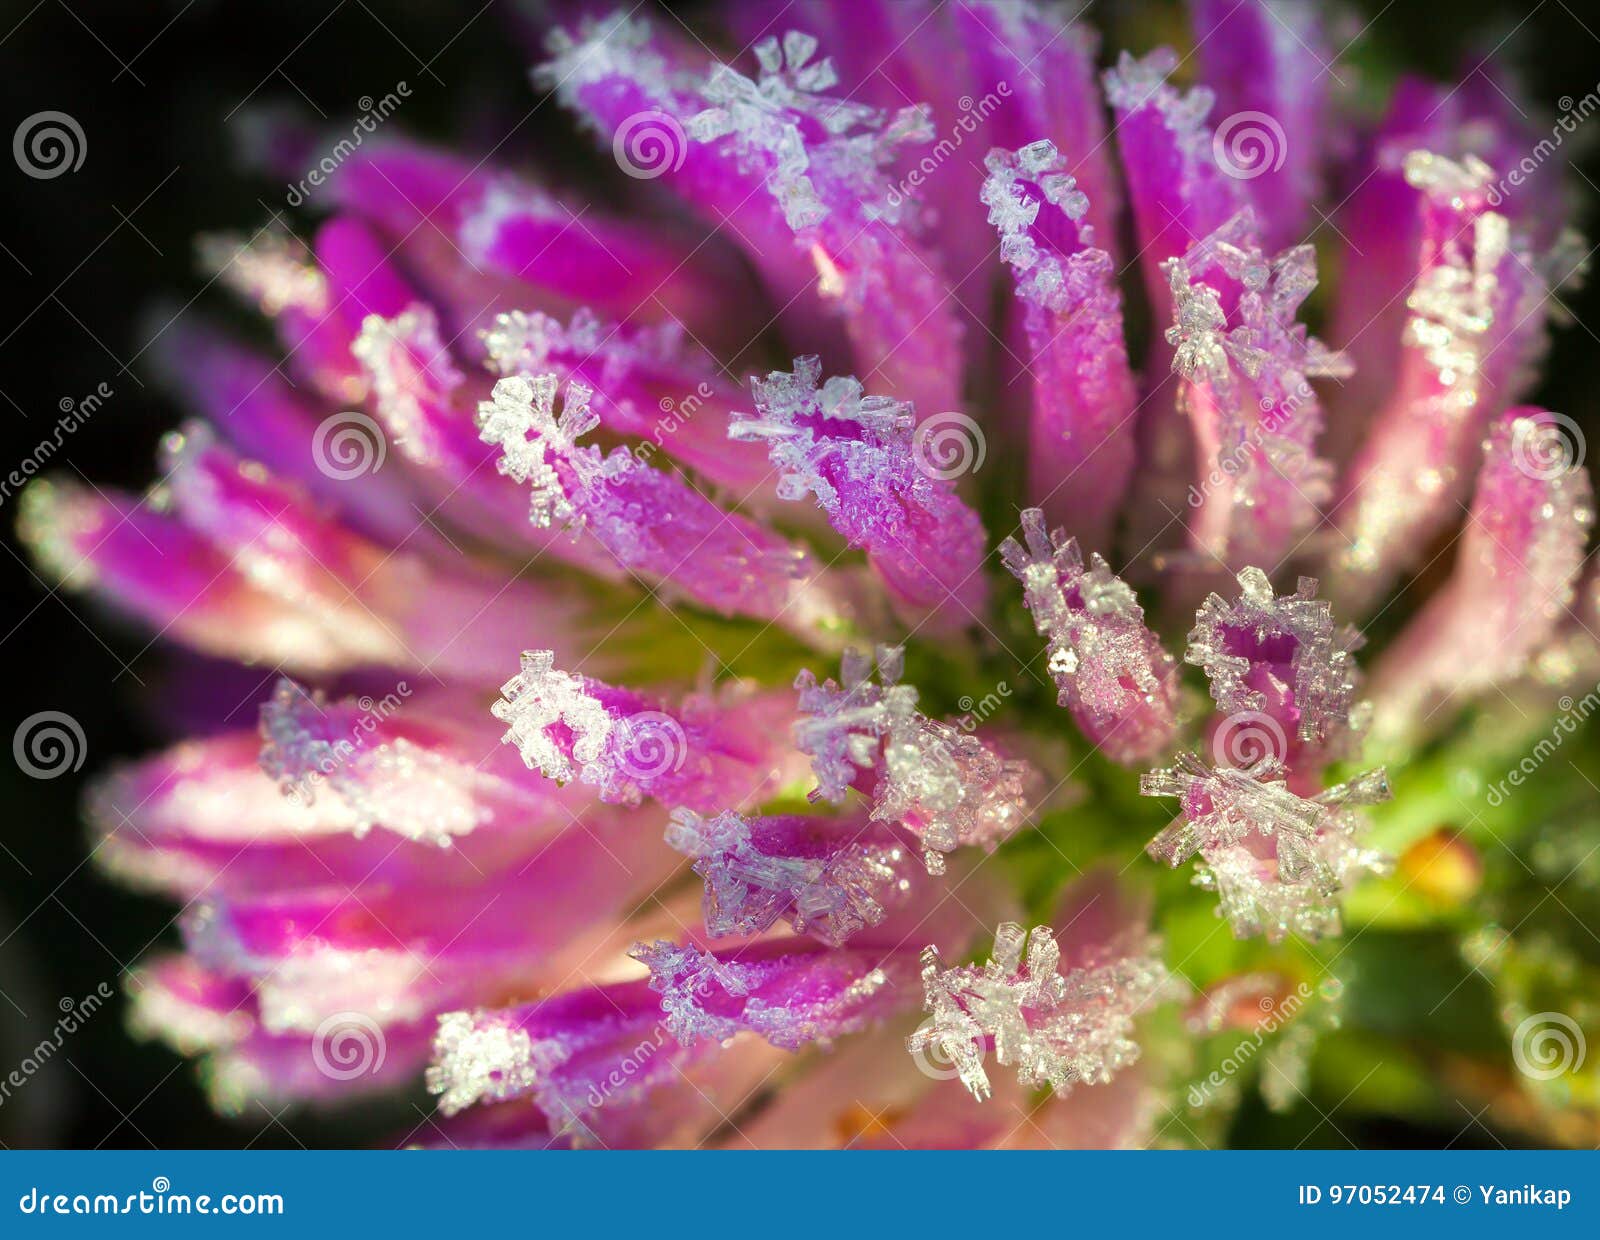 freeze detail nature purple wild flower